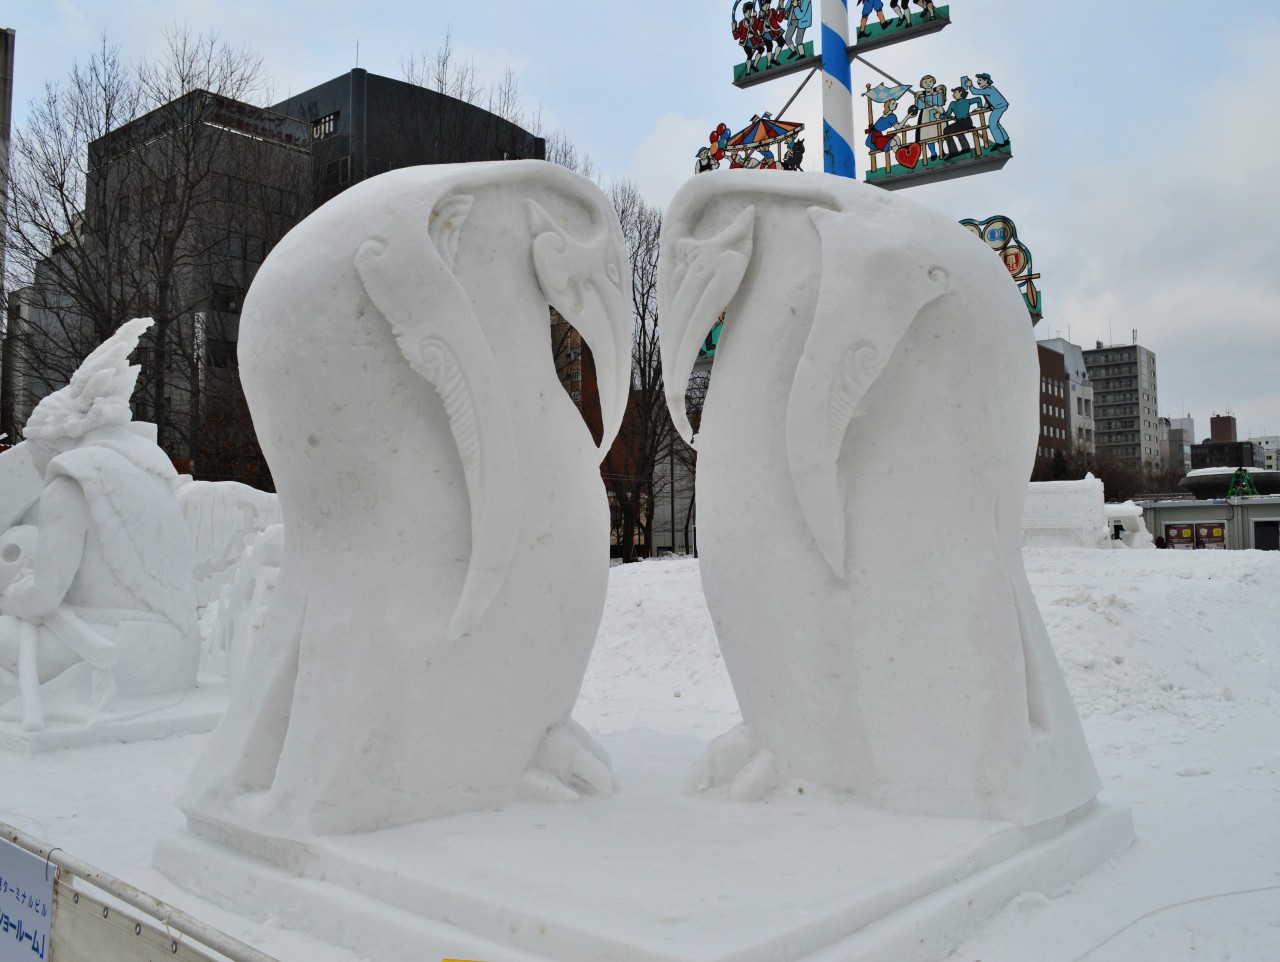 Sapporo’s International Snow Garden & Sculpture Contest